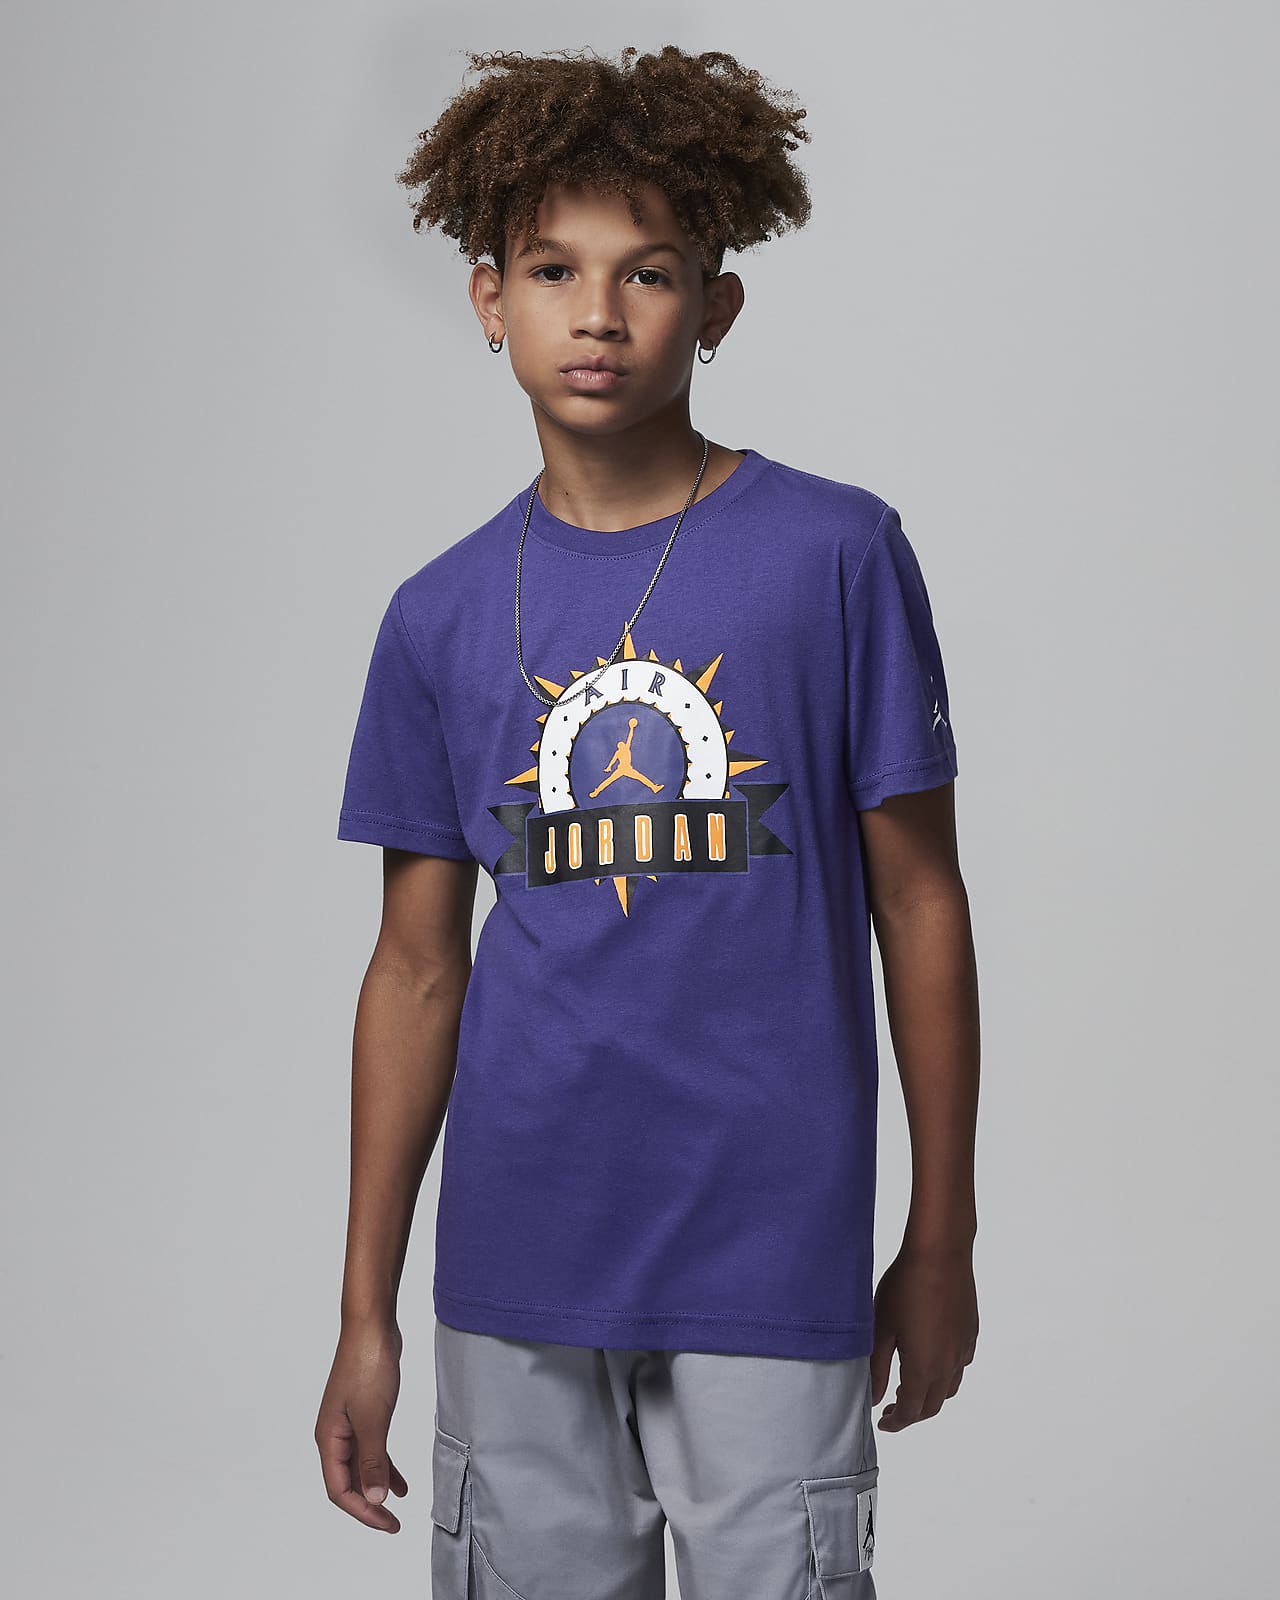 Camiseta Niño/a Jordan Stretch 95A512-001